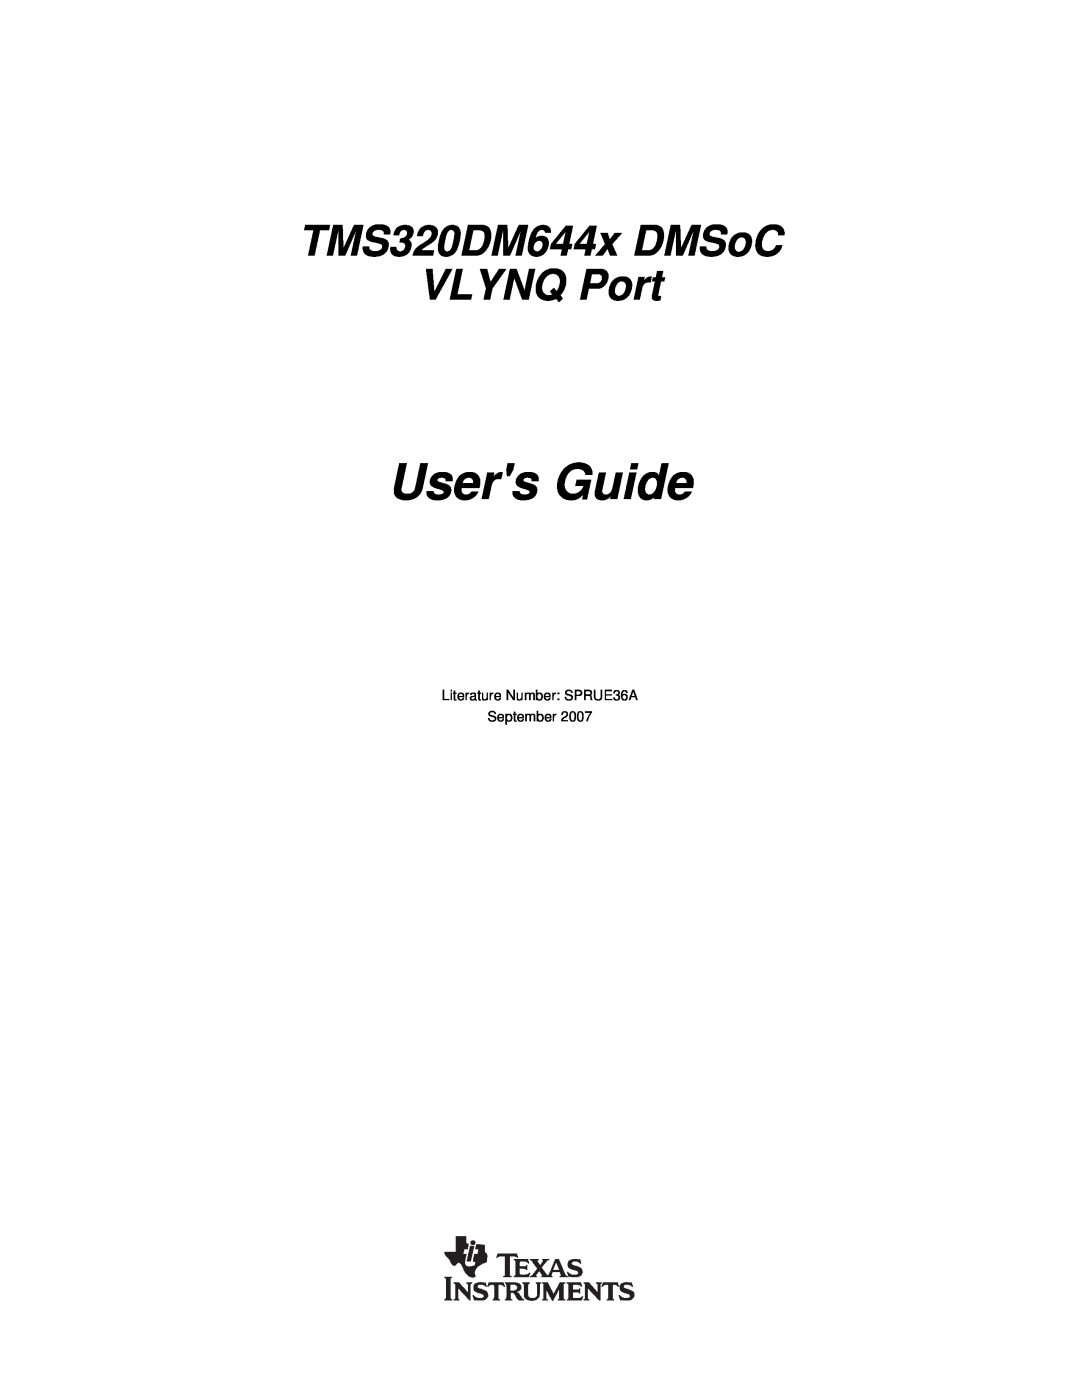 Texas Instruments manual Users Guide, TMS320DM644x DMSoC VLYNQ Port 